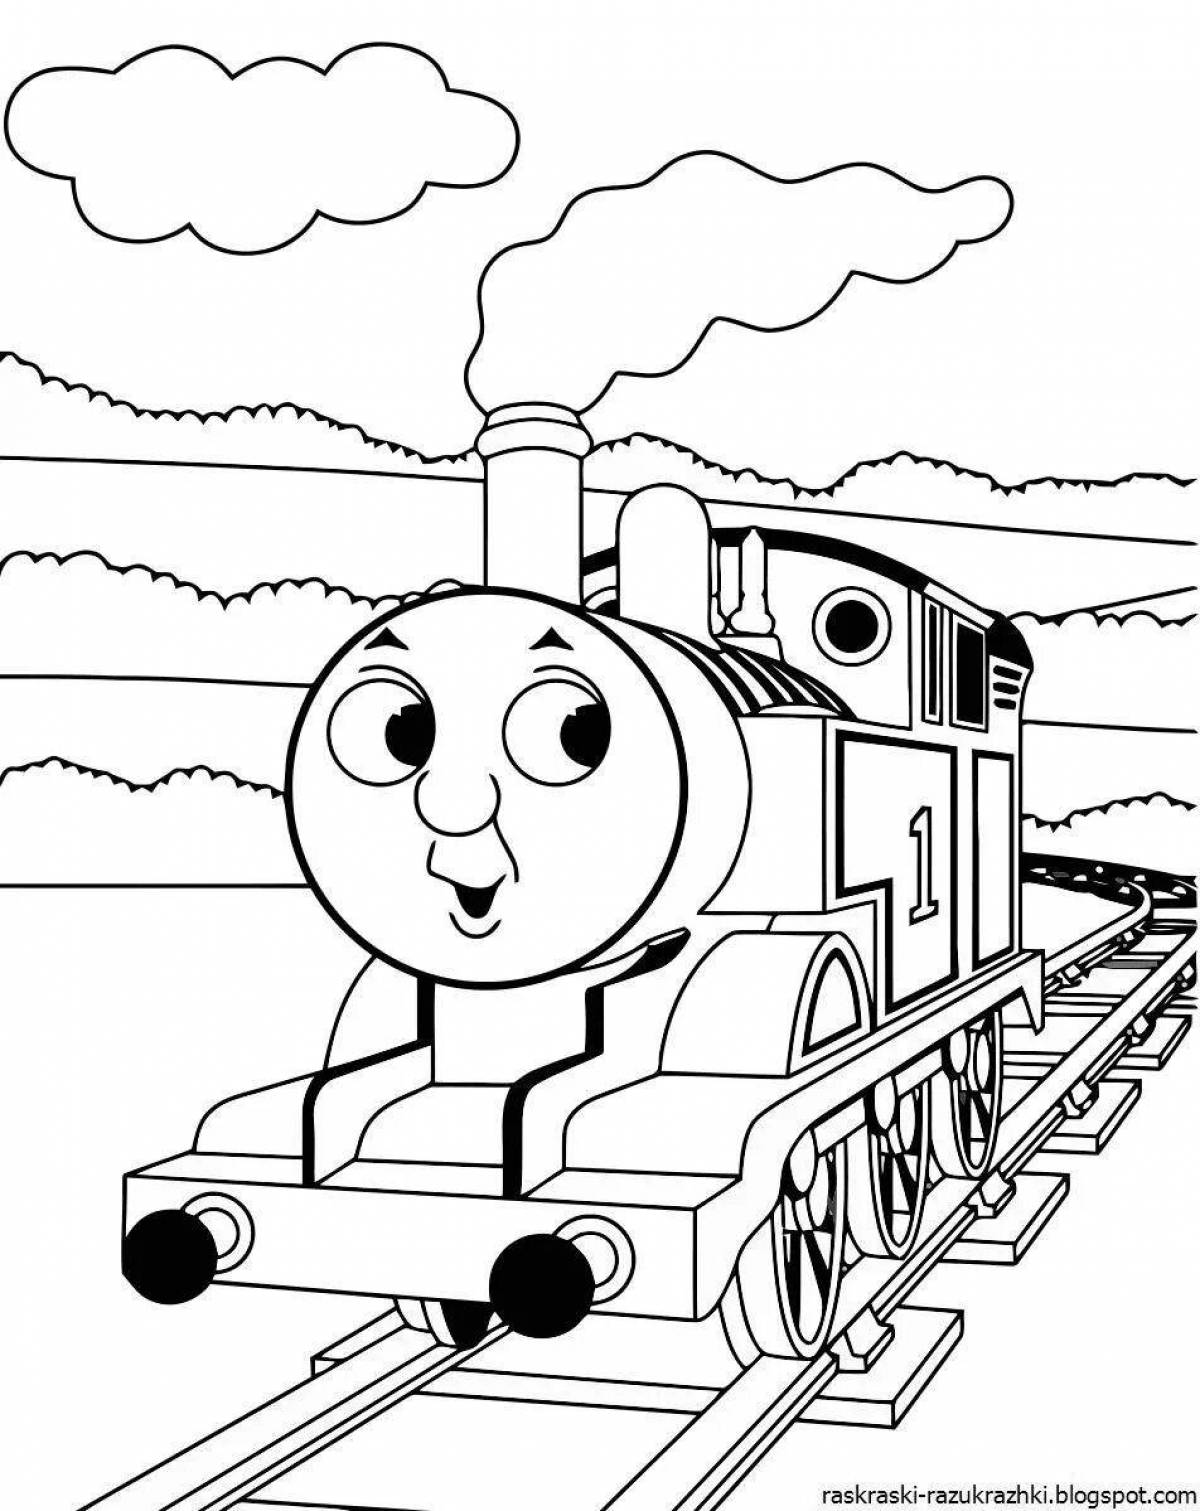 Coloring page elegant steam locomotive